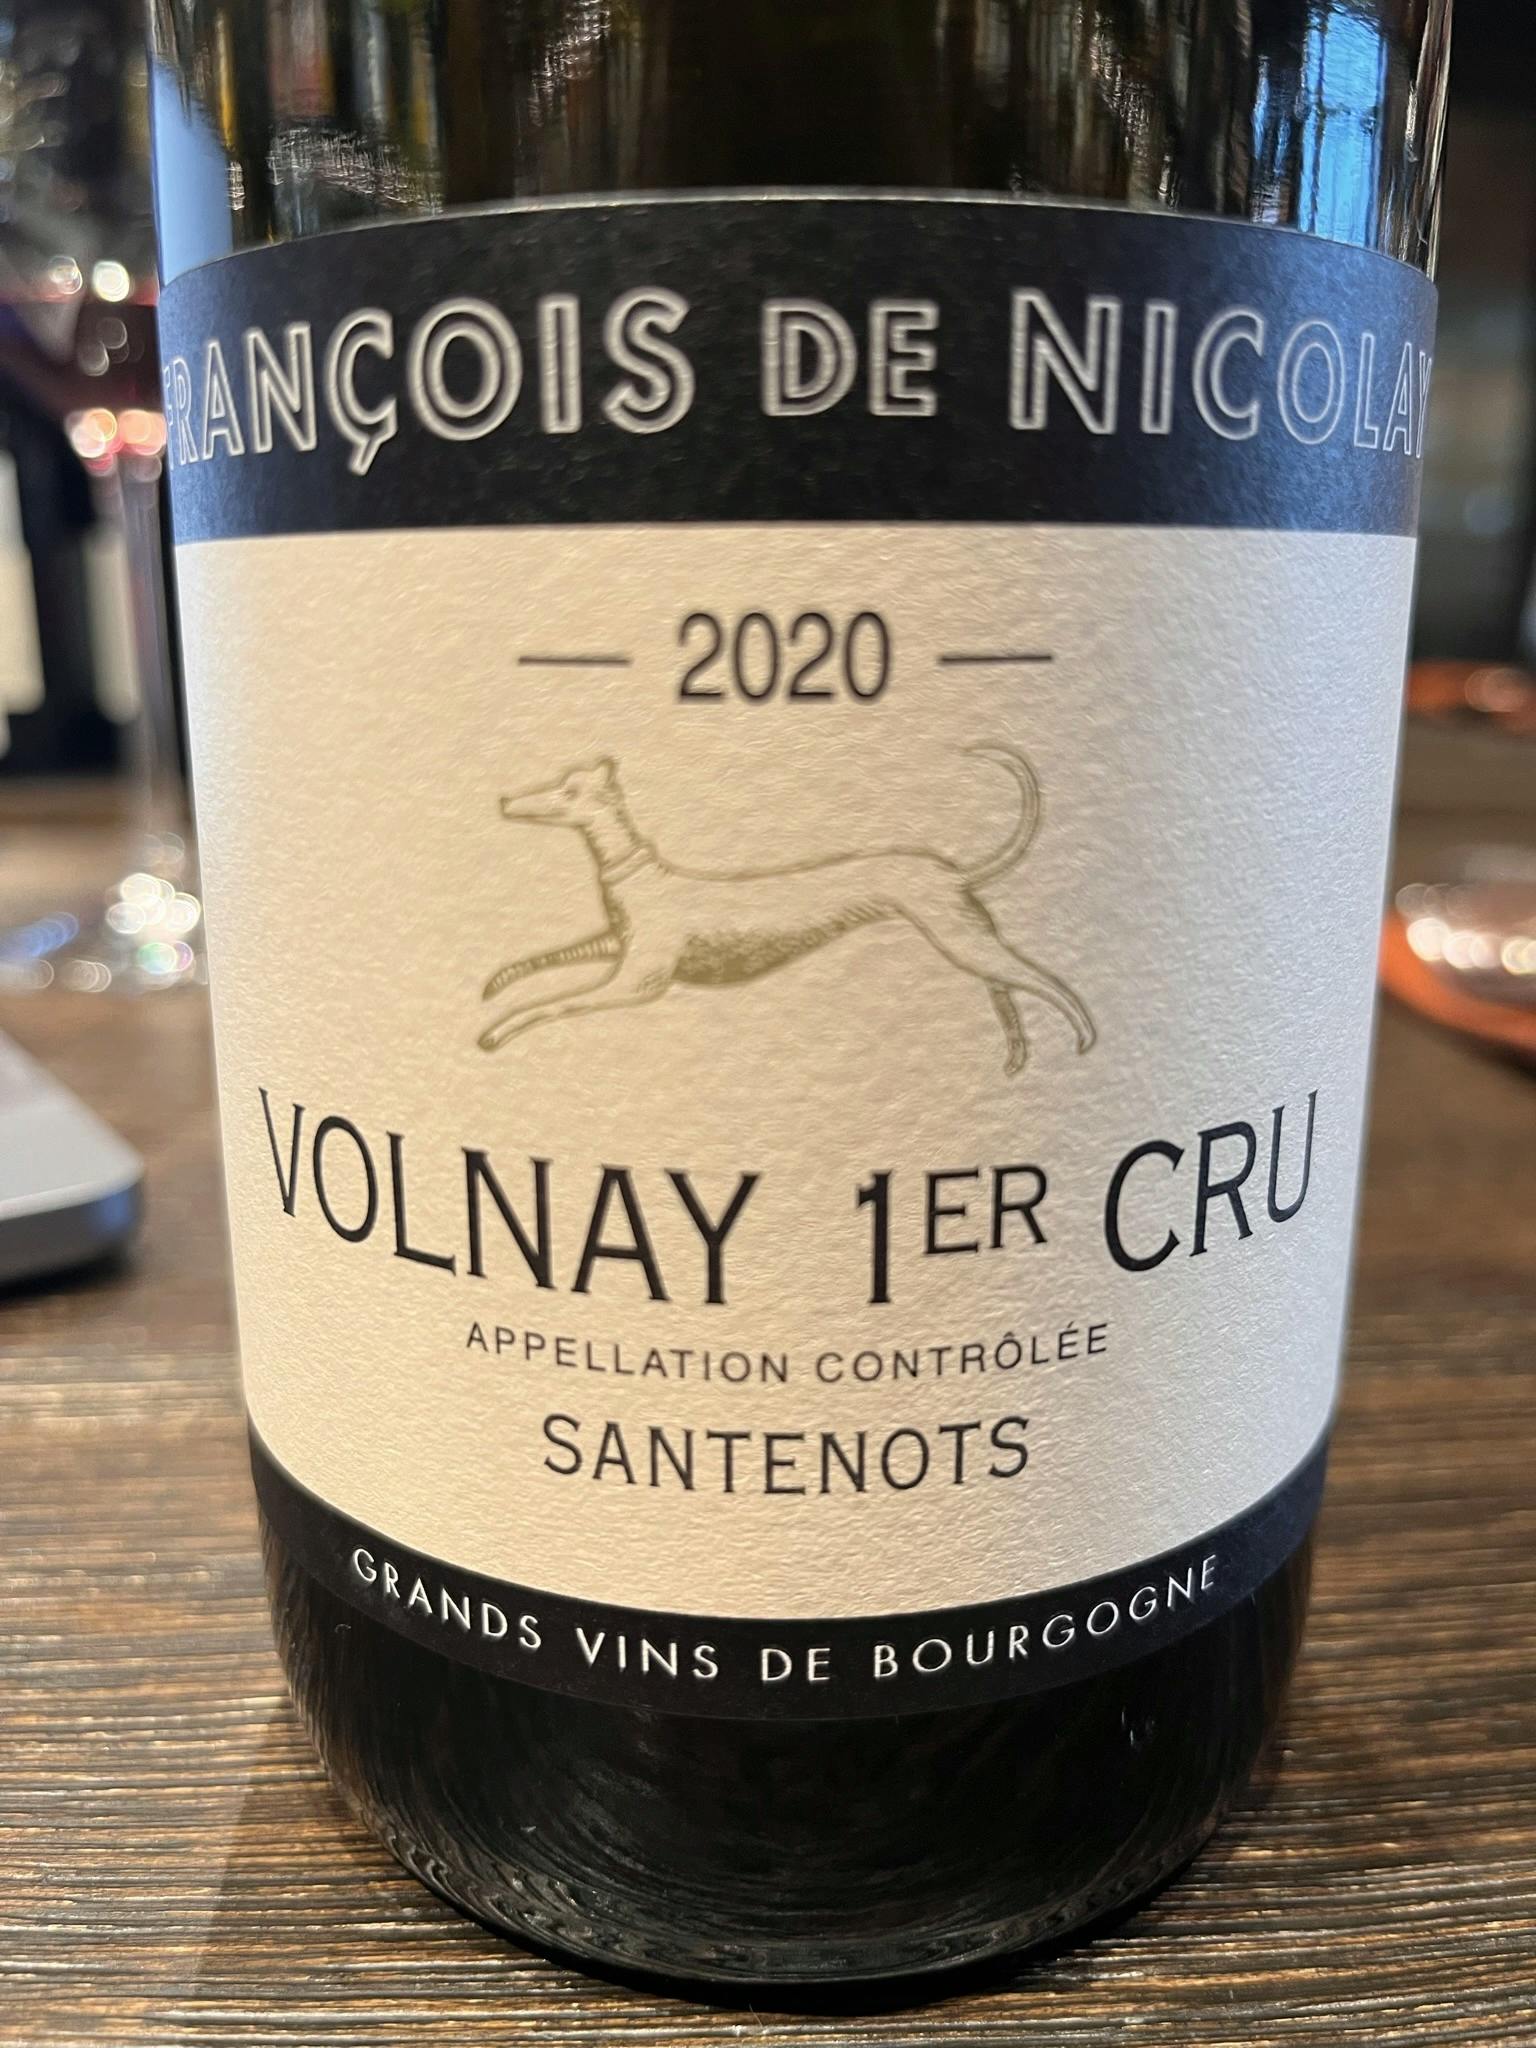 François de Nicolay Volnay 1er Cru Santenots 2020